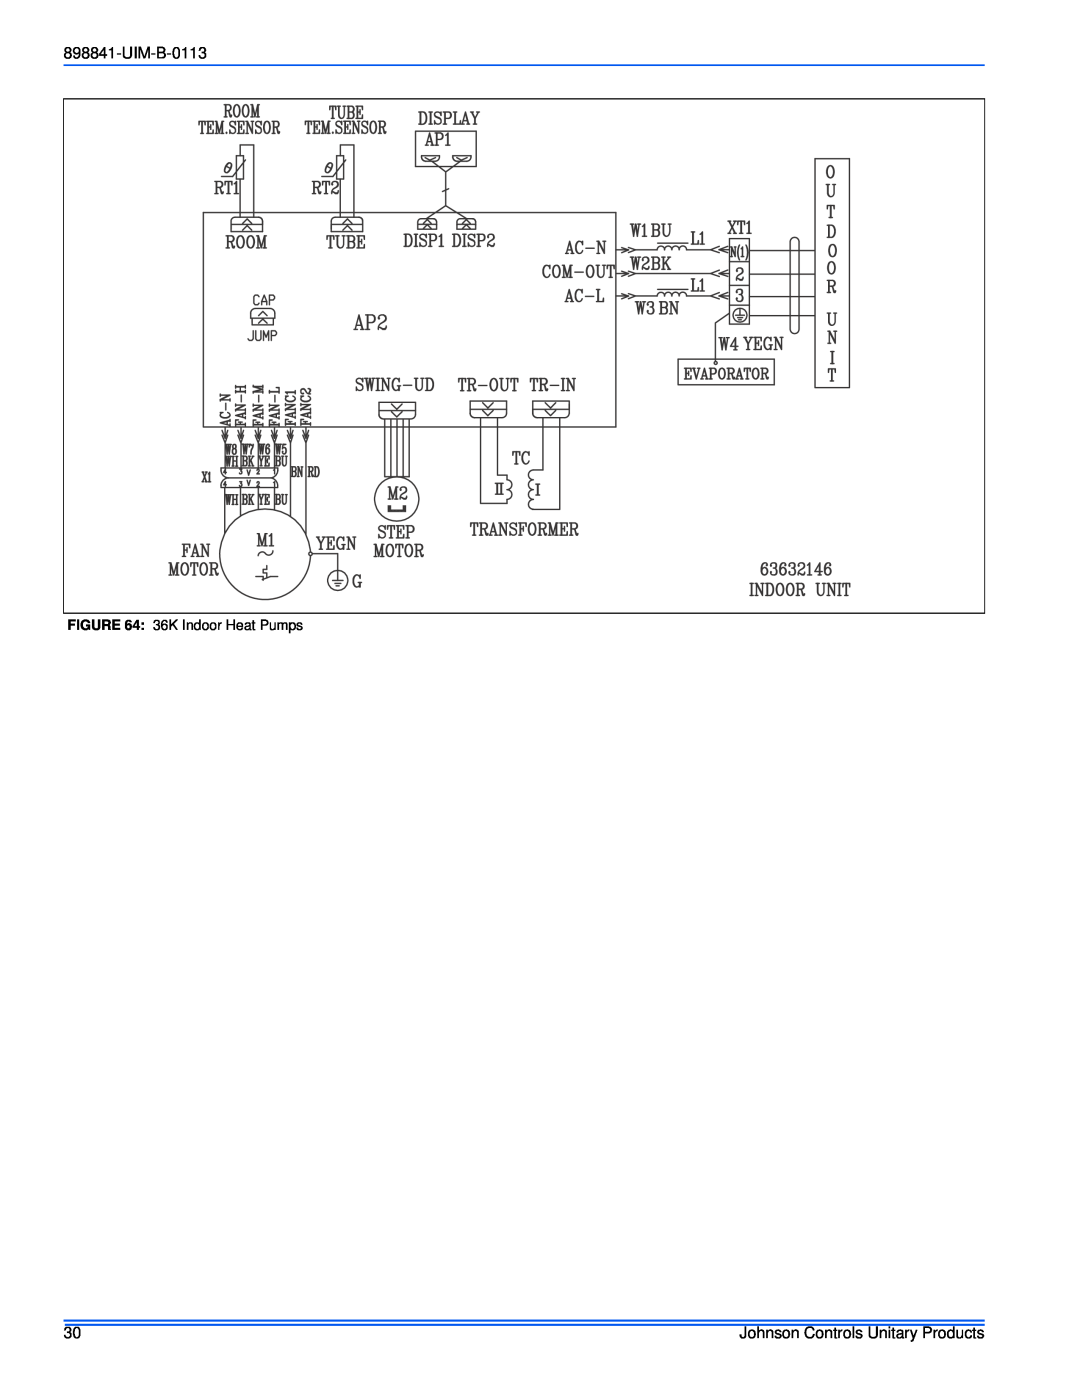 Johnson Controls 22 SEER installation manual UIM-B-0113, 36K Indoor Heat Pumps, Johnson Controls Unitary Products 